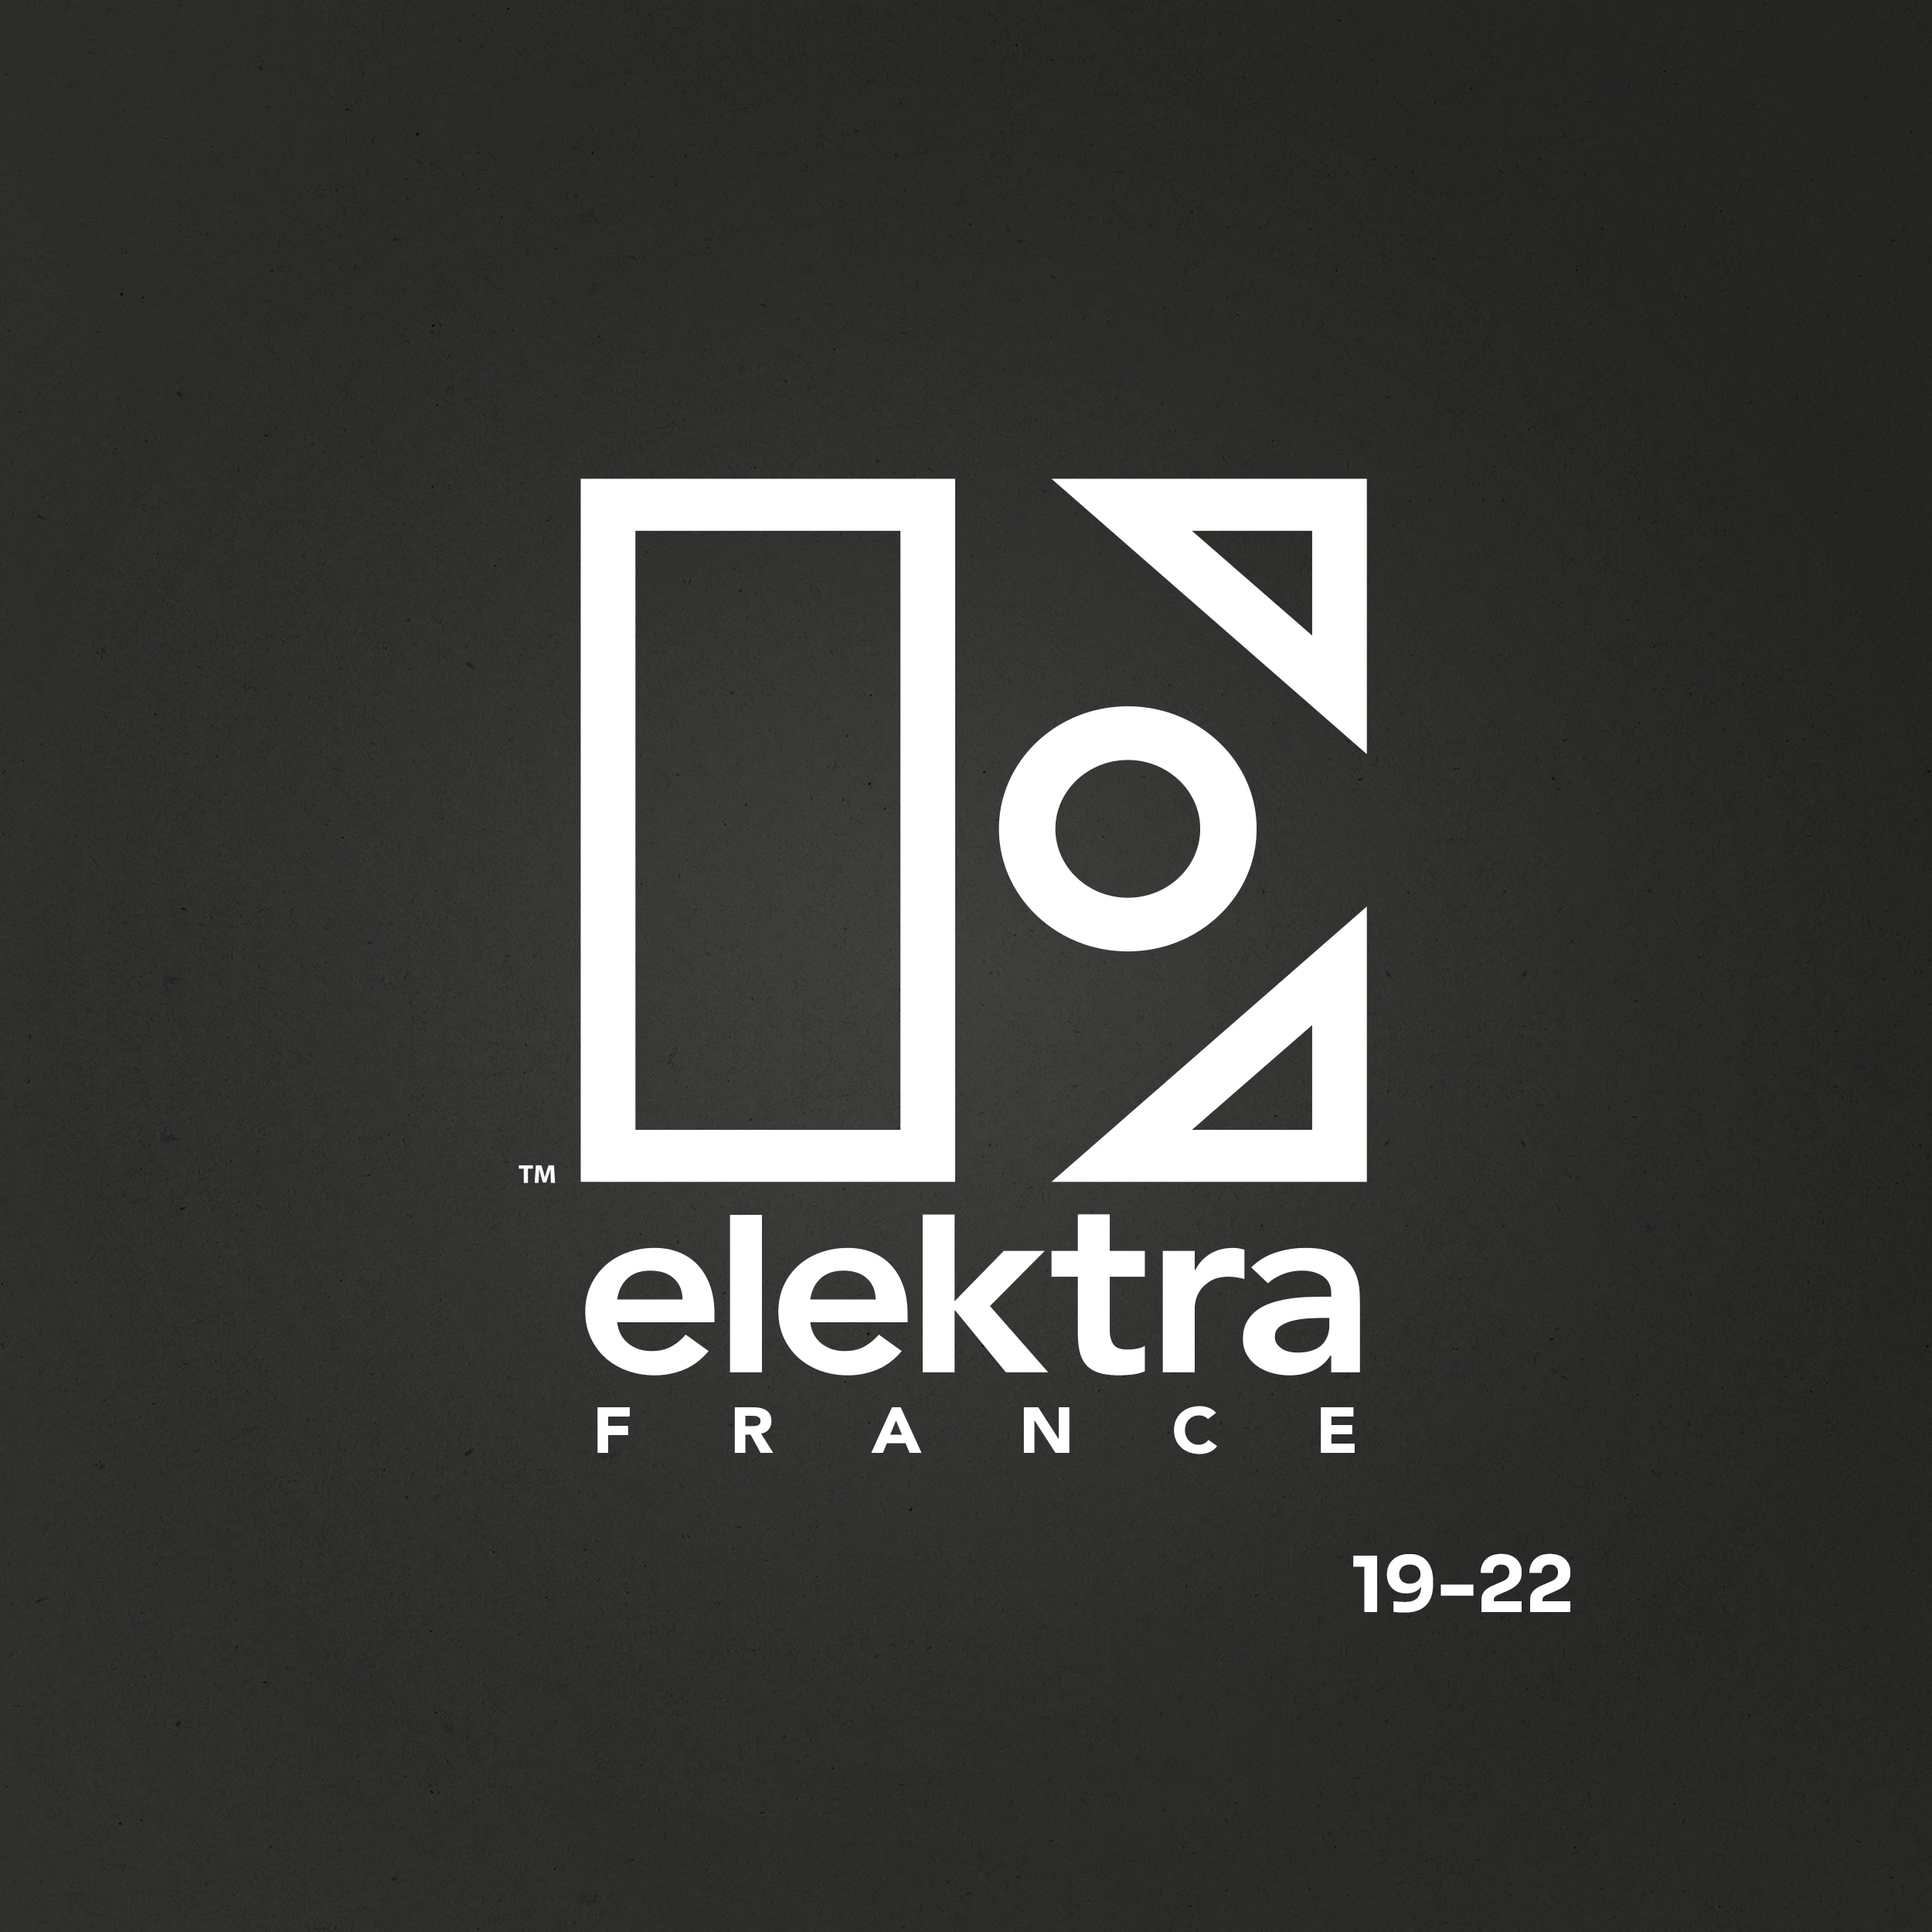 projet : Elektra France 19-22